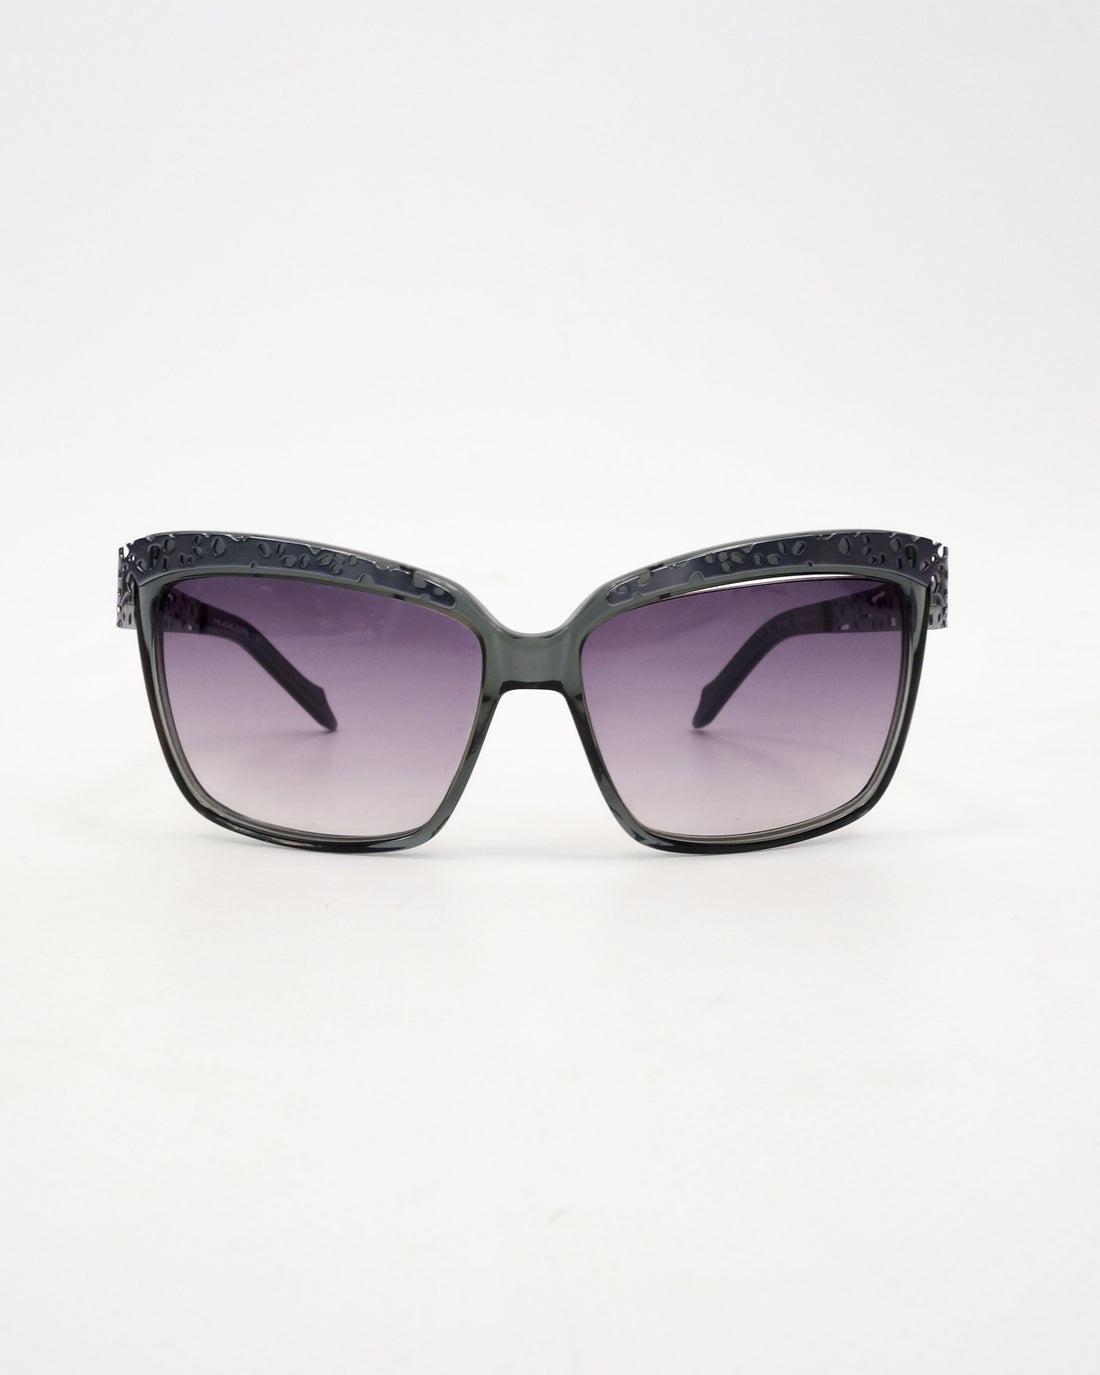 Mugler Decorated Sideburns Sunglasses 2000's